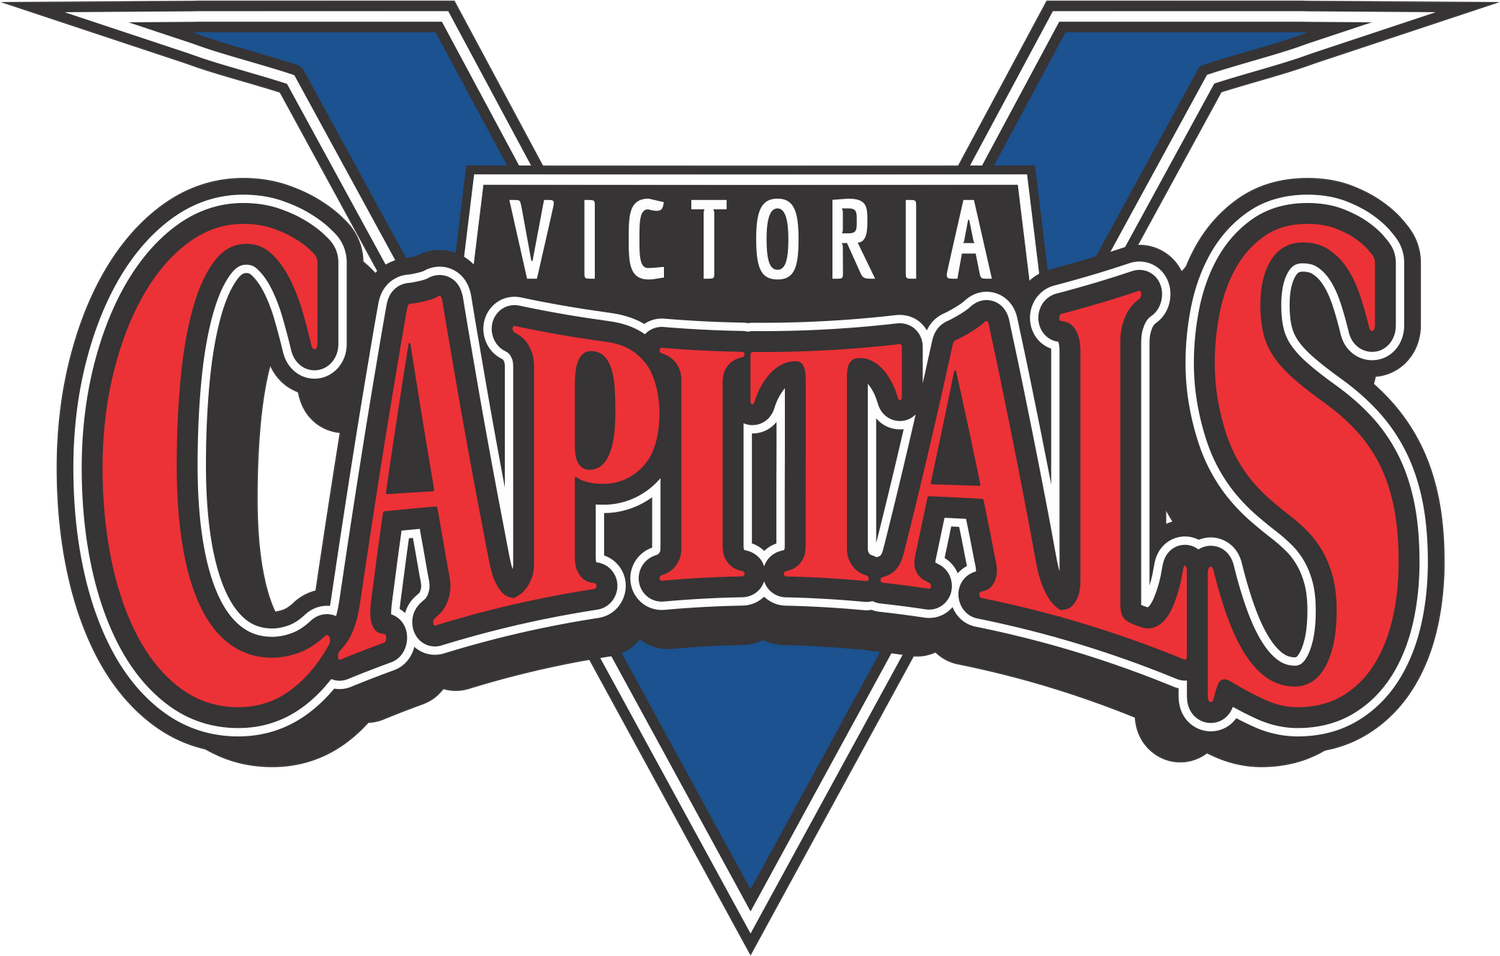 Victoria Capitals South Baseball Spirit Wear